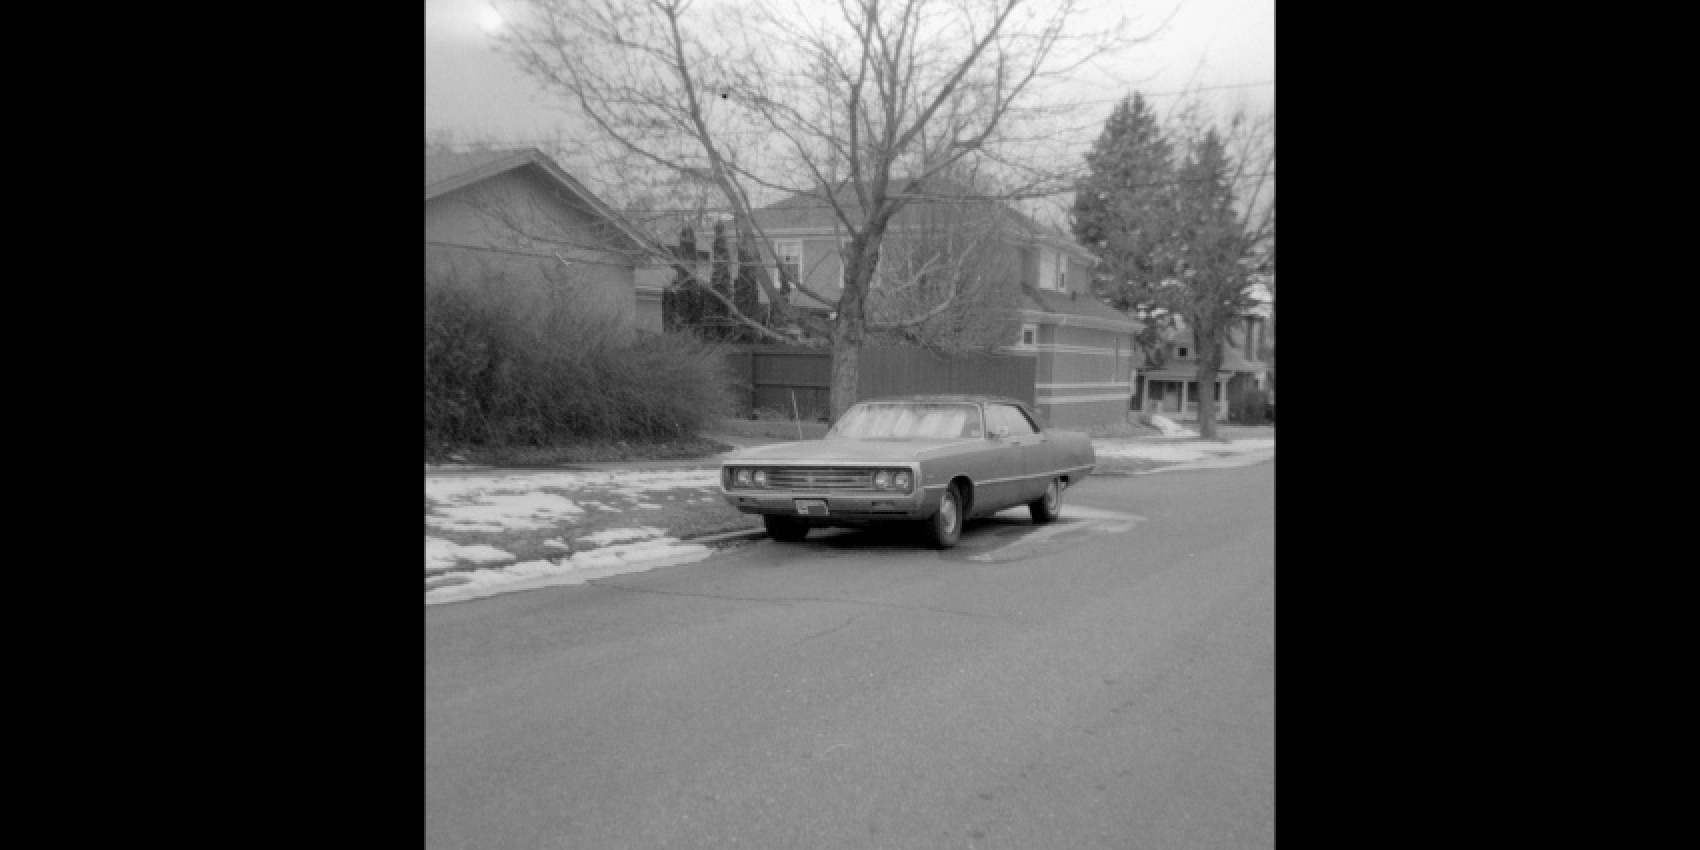 autos, cars, chrysler, classic cars, 1971 chrysler newport custom photographed with kodak starmite iii film camera